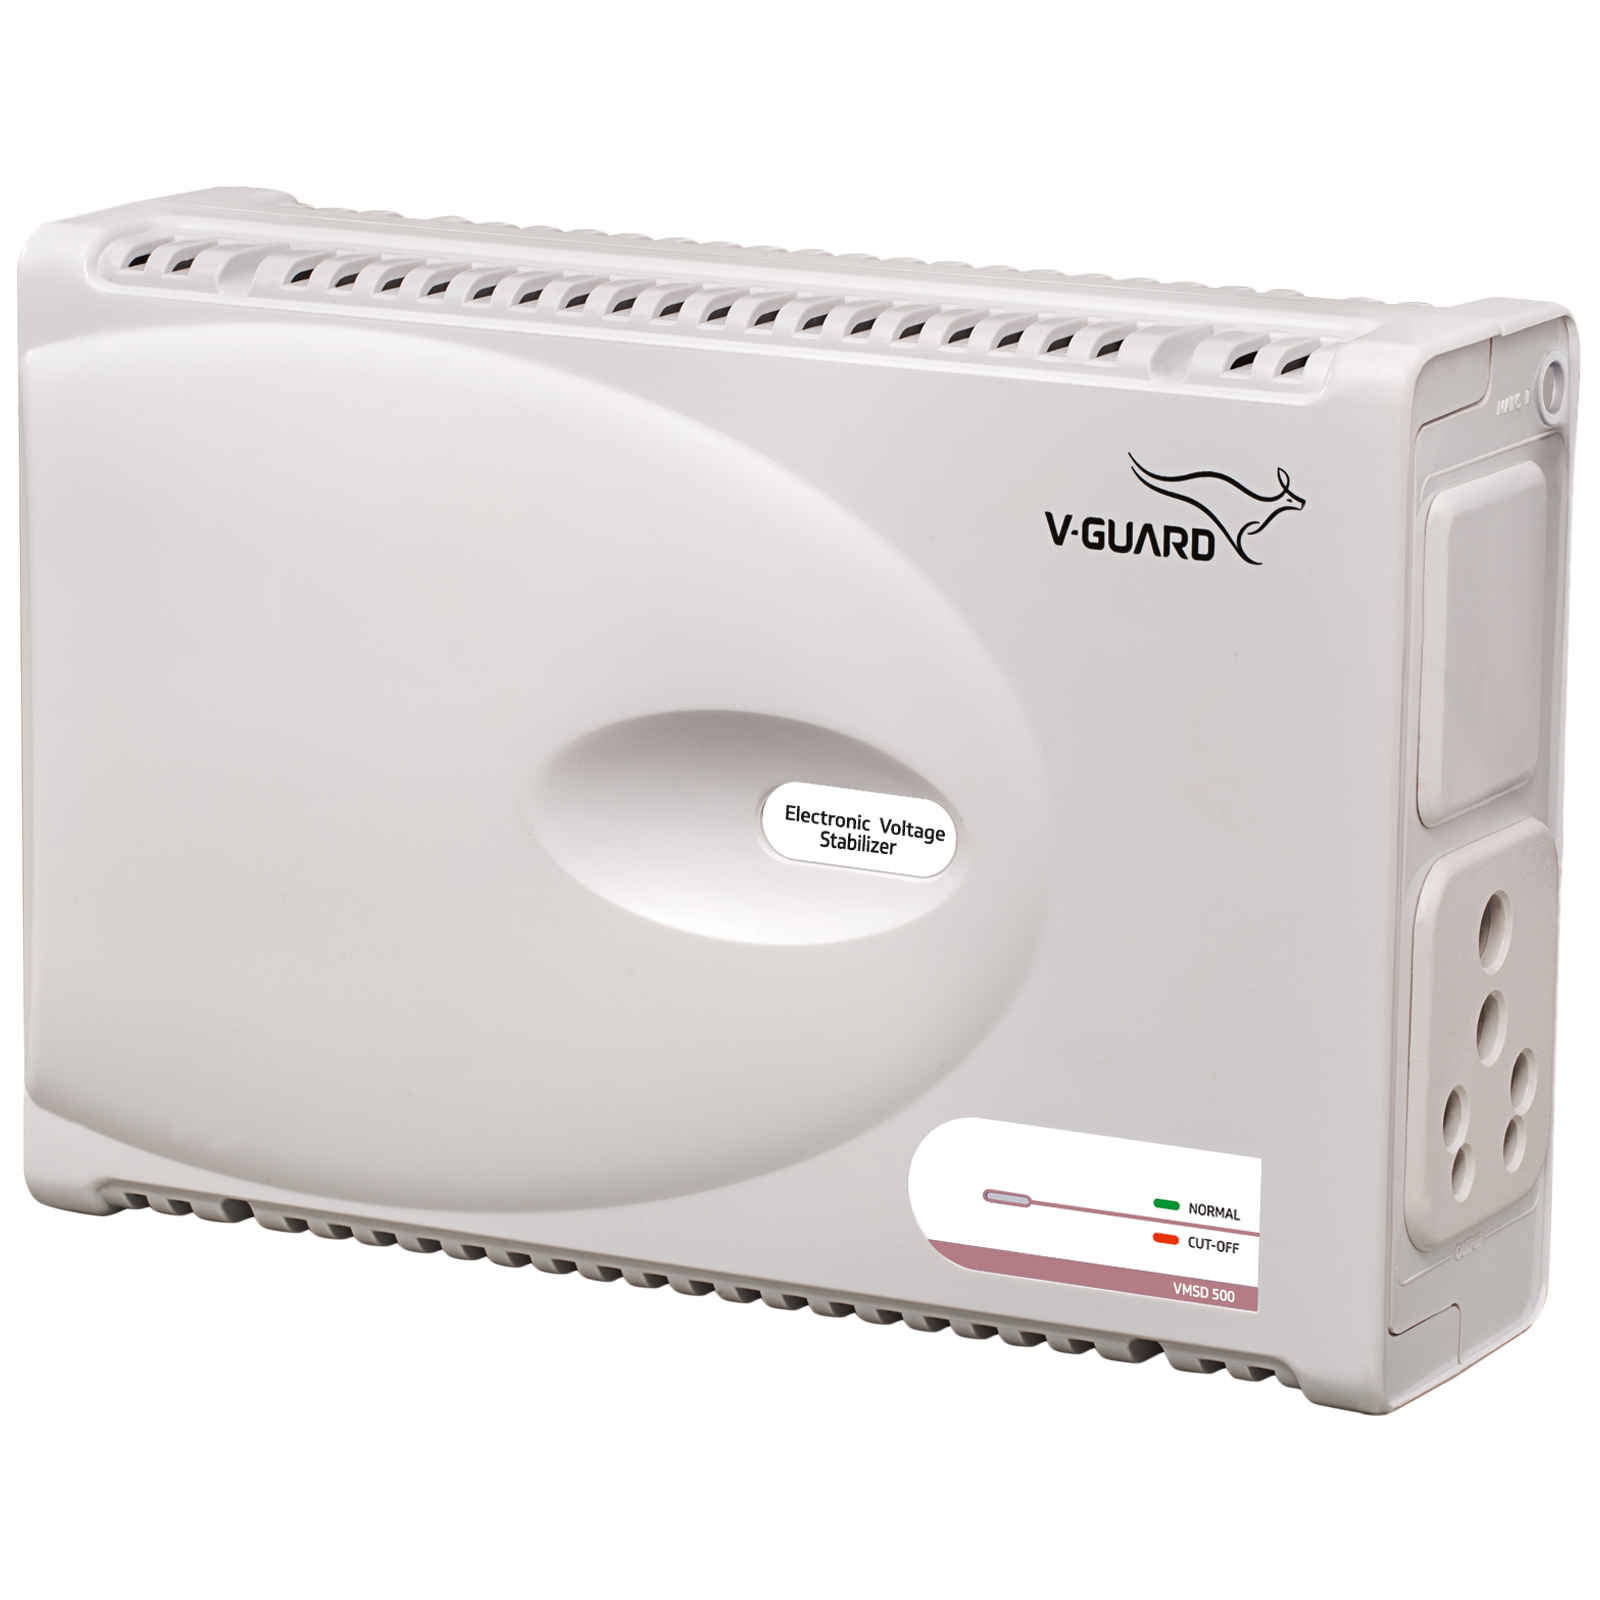 V-Guard 15 Amps Voltage Stabilizer For Washing Machine, Dishwasher and Microwave Oven (160 - 270V Voltage Range, Thermal Overload Protection, VMSD 500, White)_1